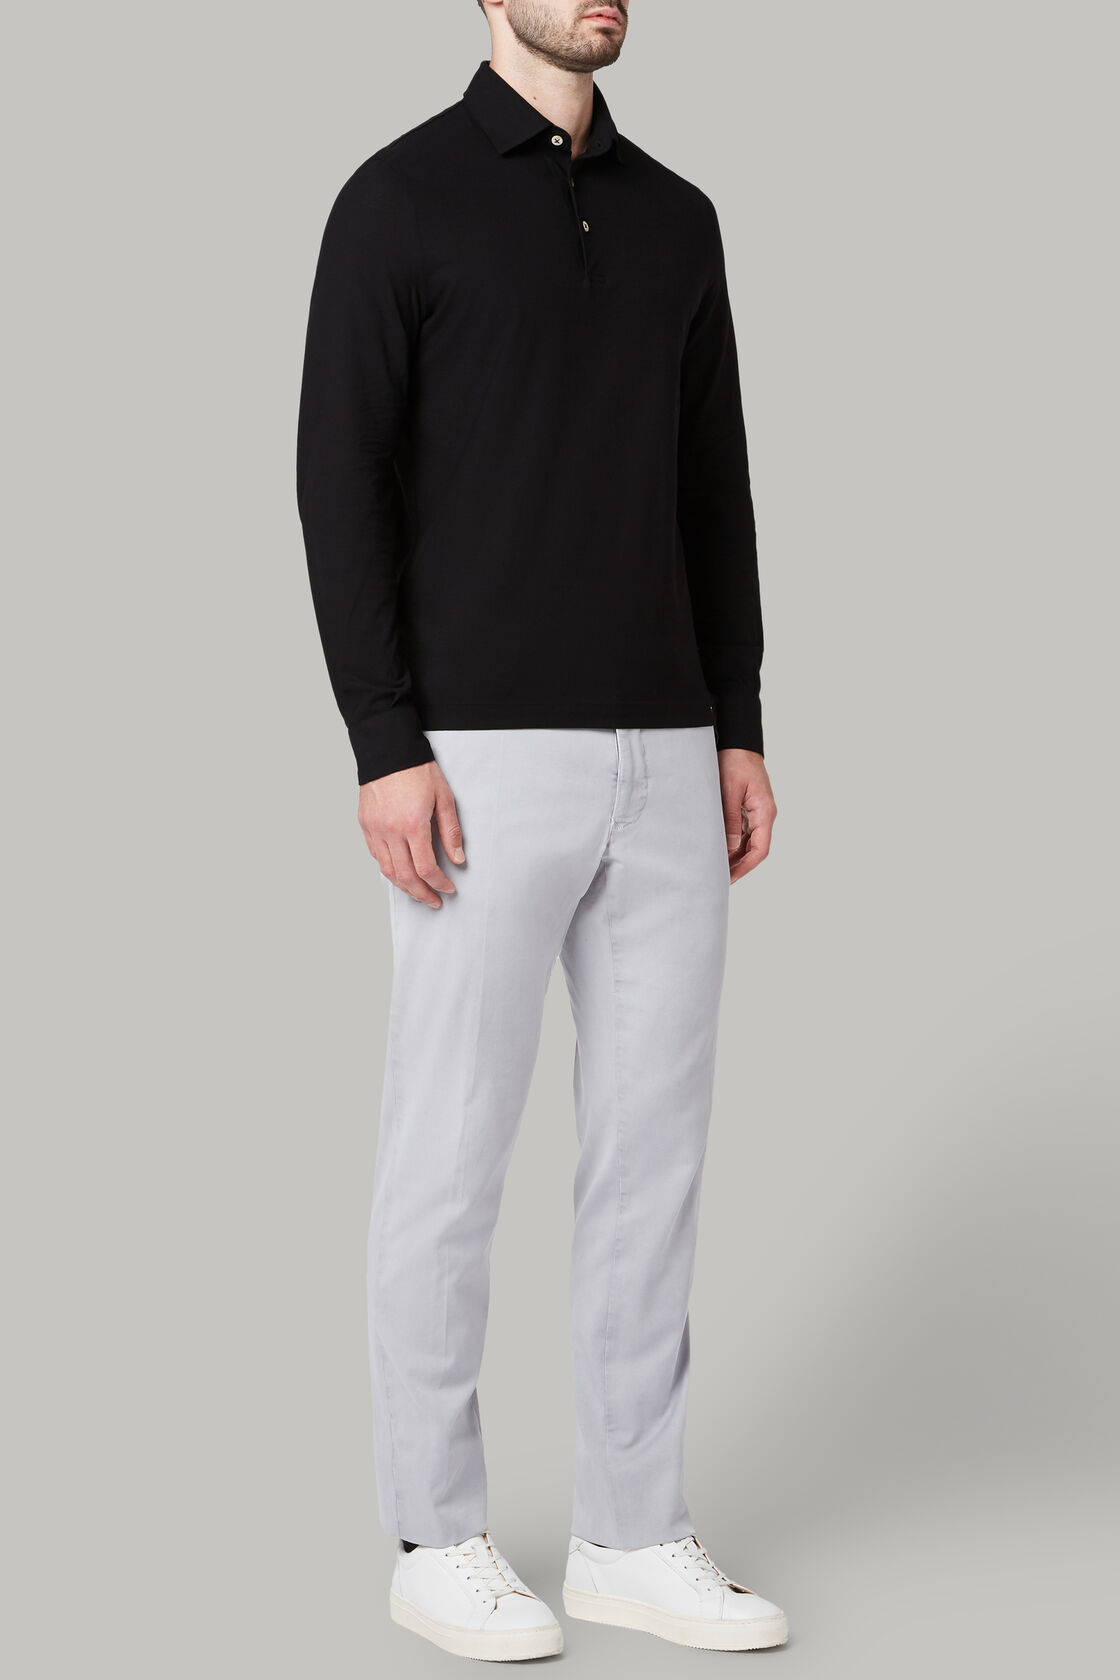 Black Cotton Crepe Jersey Polo Shirt, , hi-res